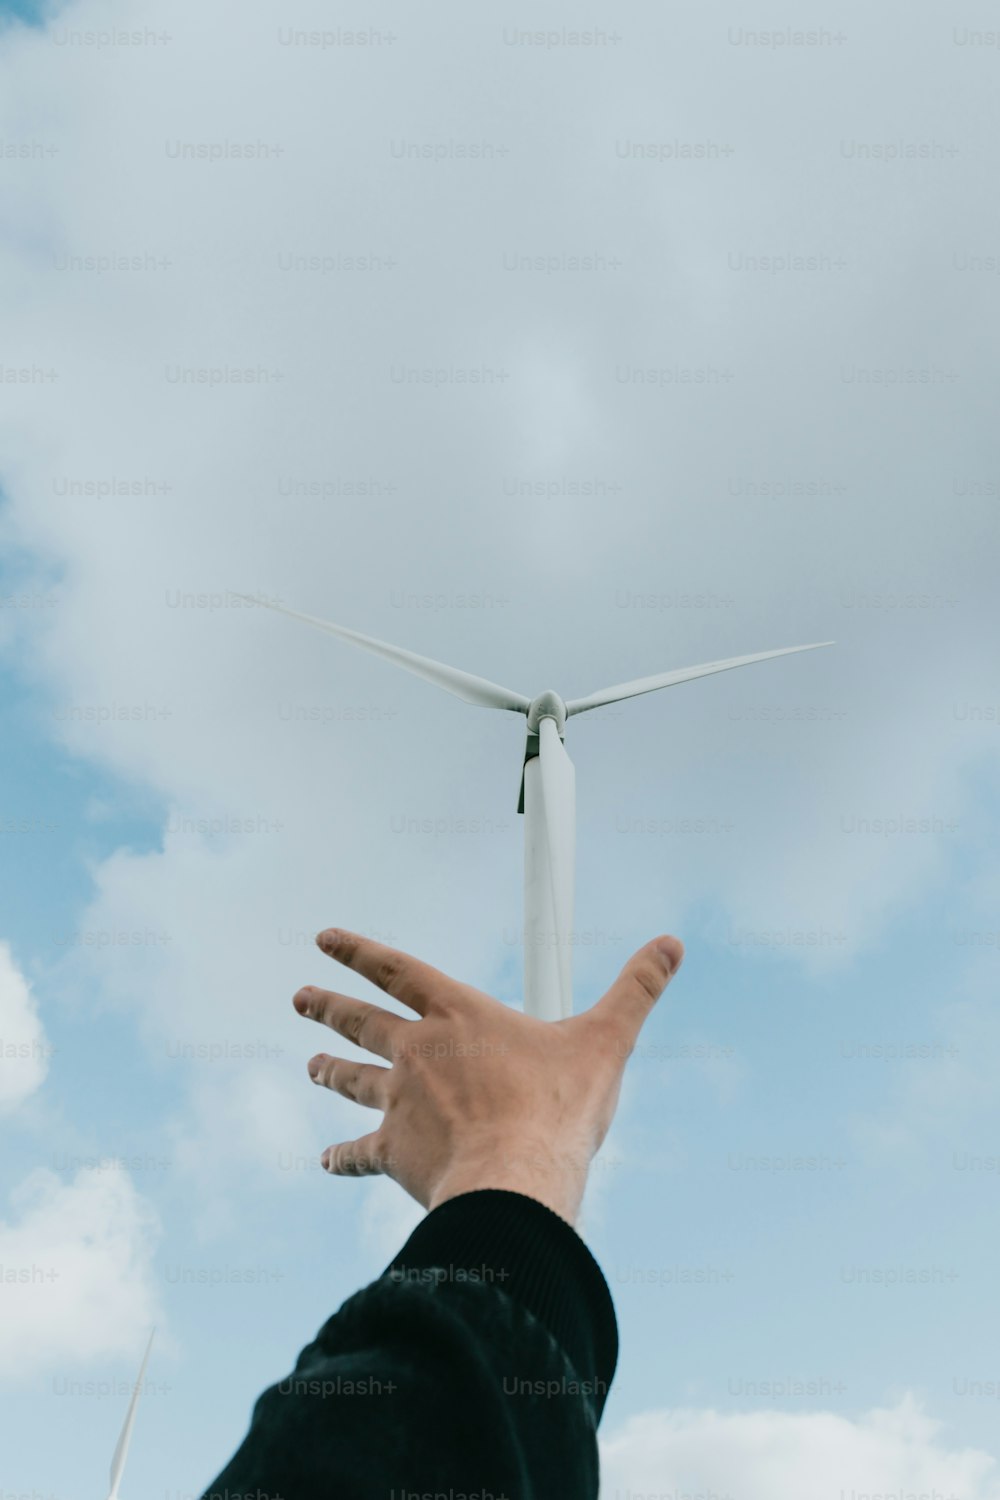 a hand reaching up towards a wind turbine